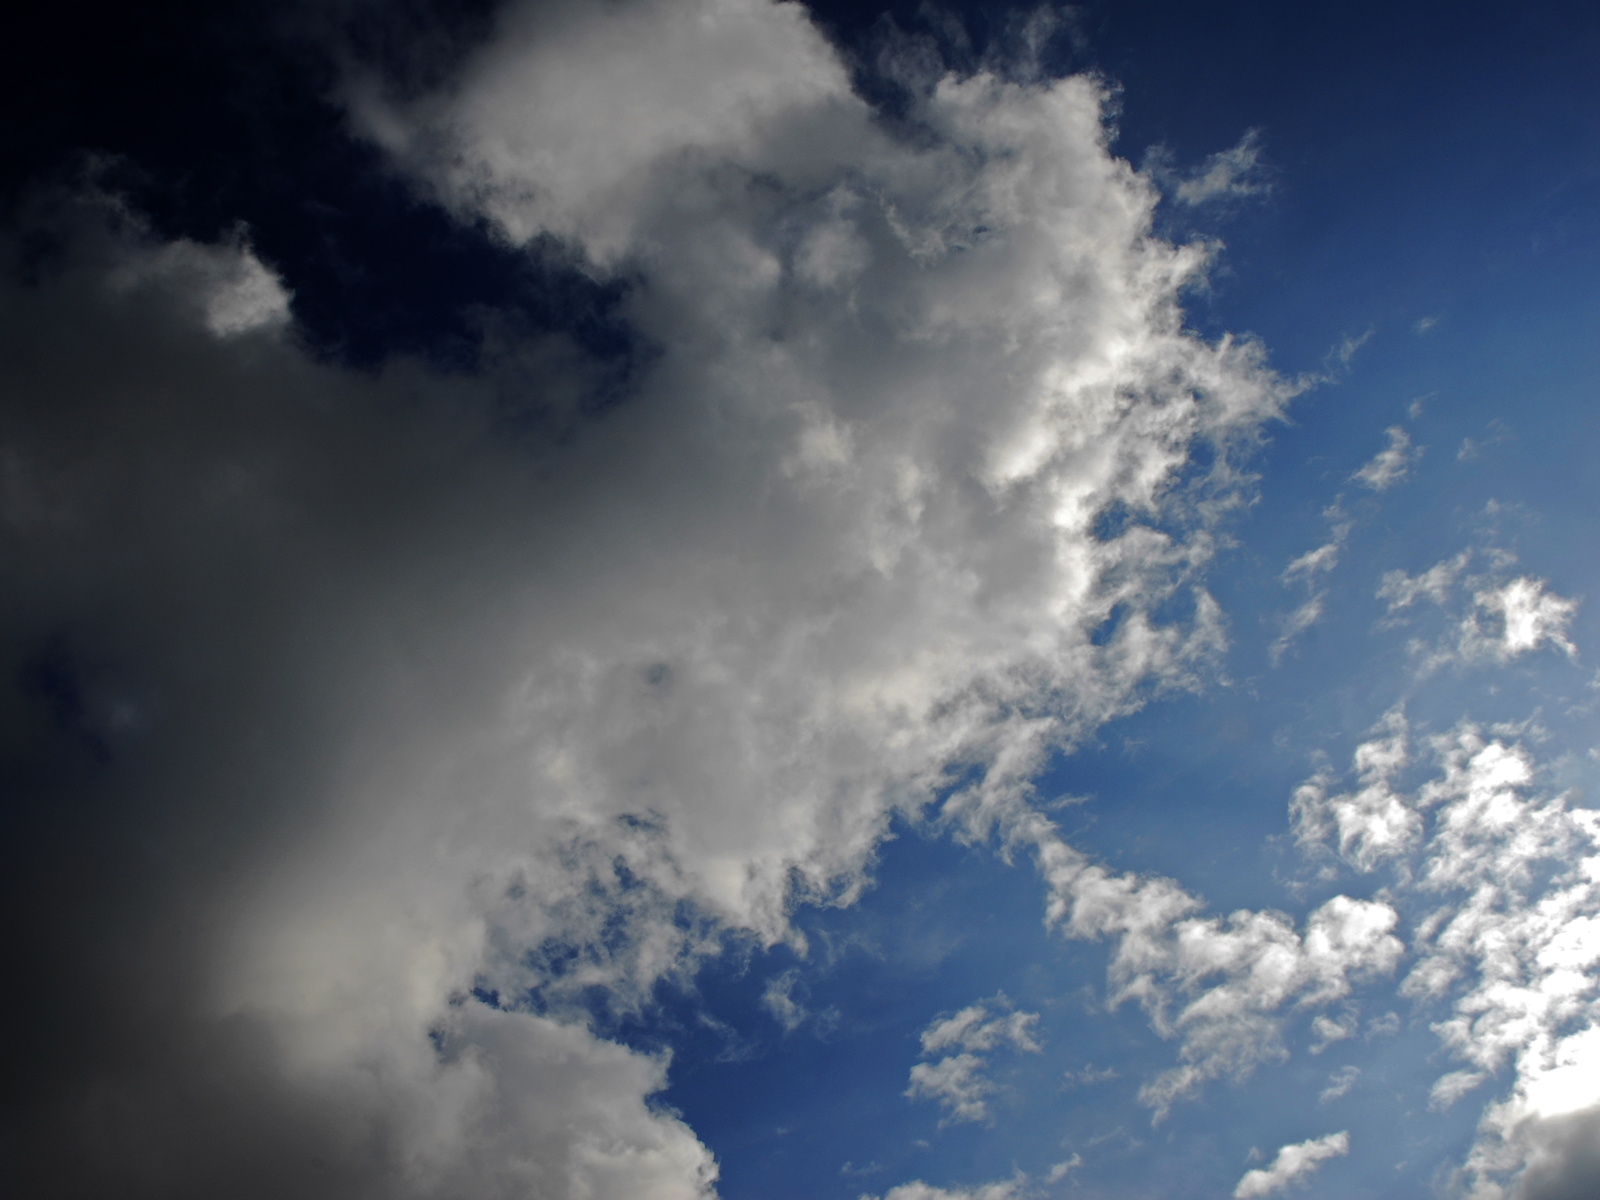 Rain cloud series (image 8 of 15) photo